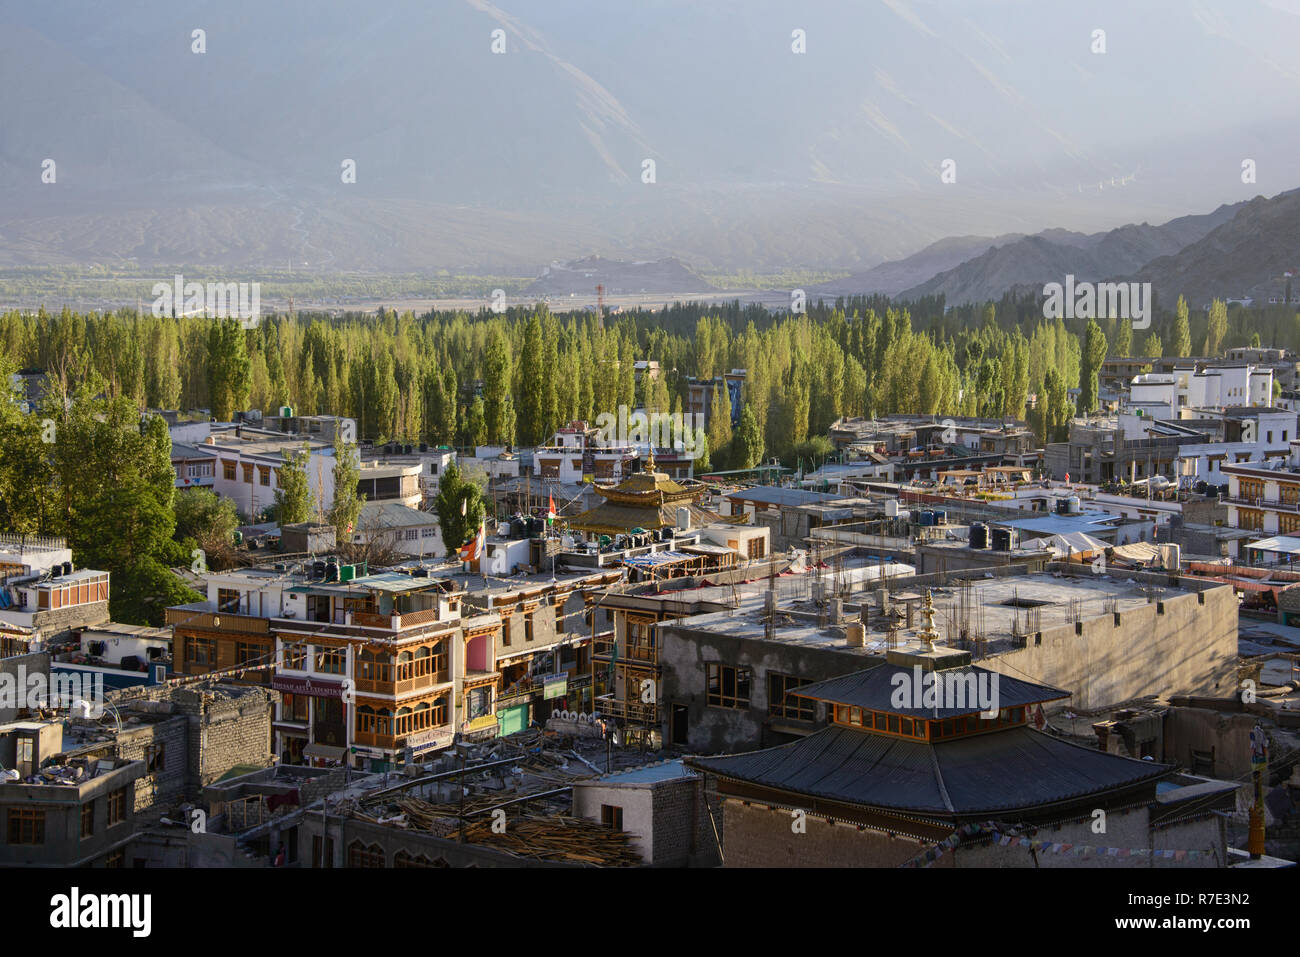 View of Leh City, Stok Kangri and the Ladakh Range, Leh, Ladakh, India Stock Photo